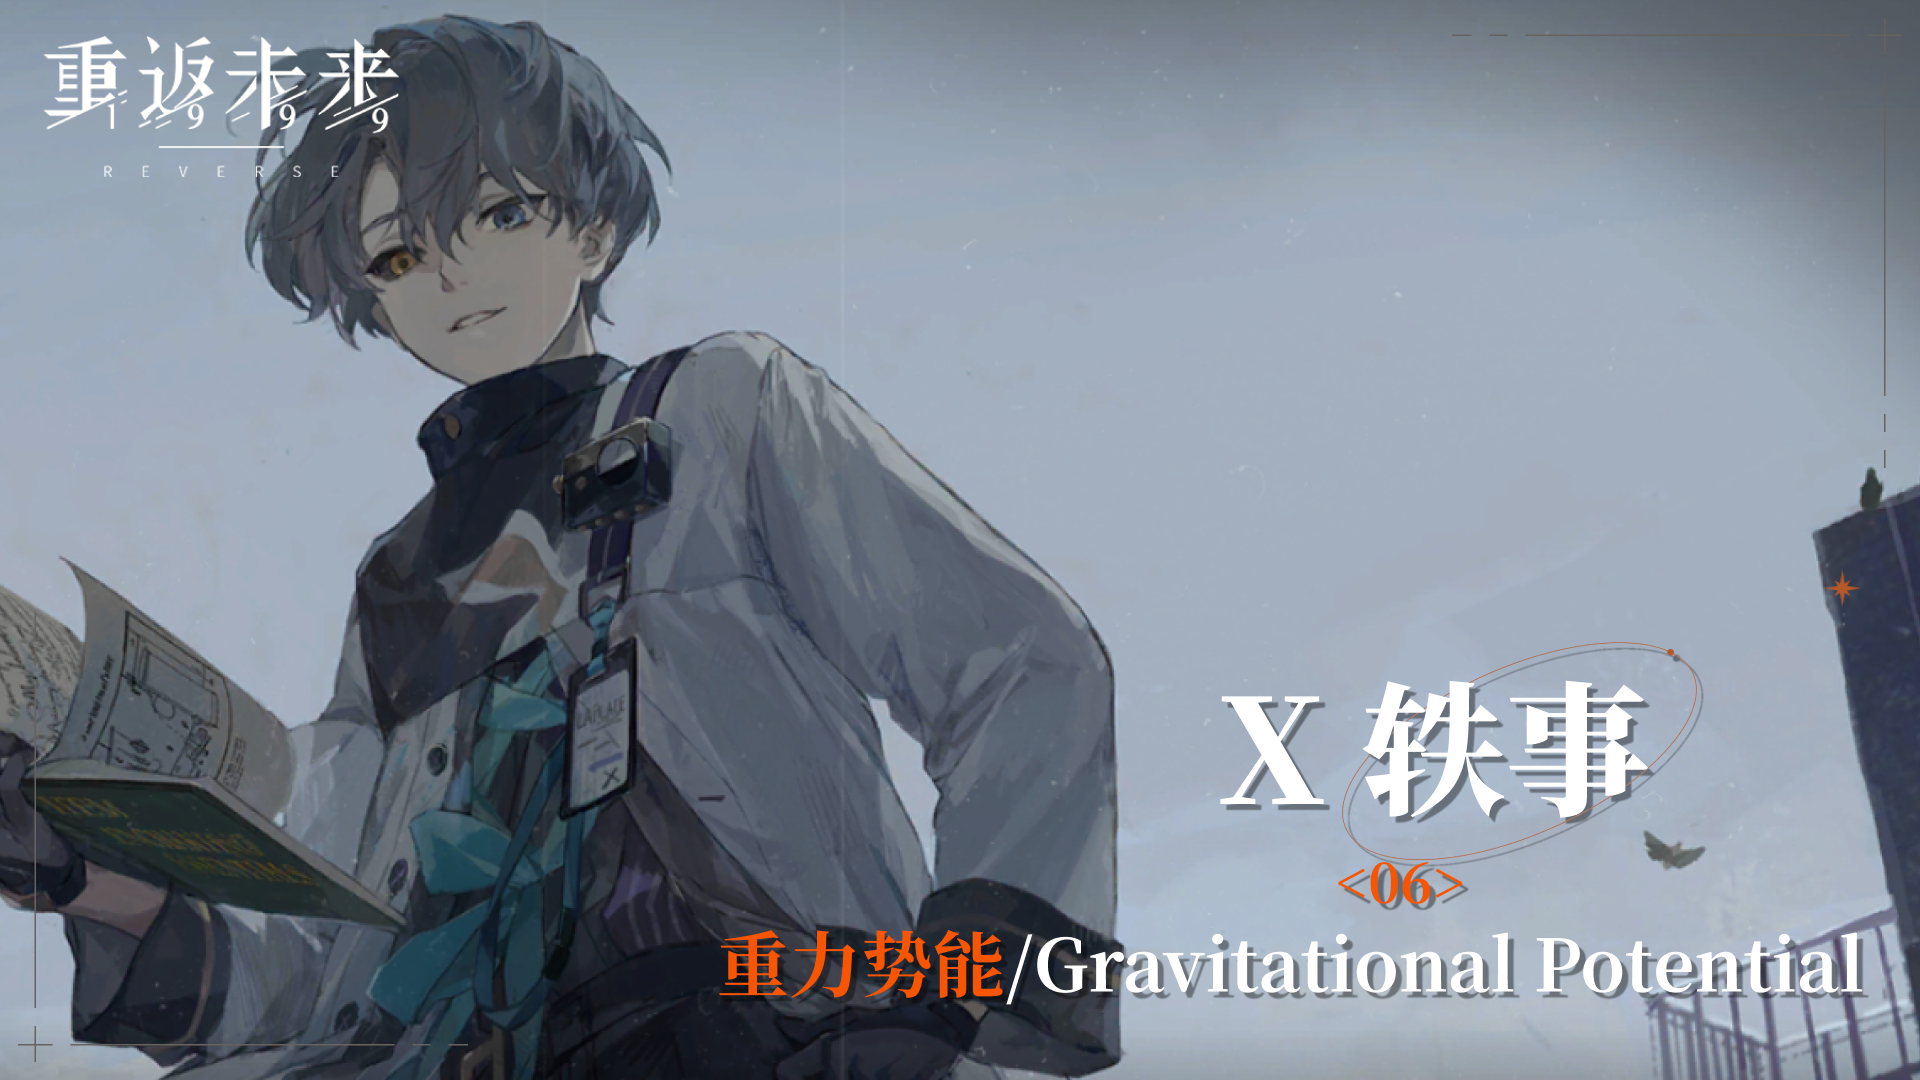 【X轶事】06 重力势能/Gravitational Potential